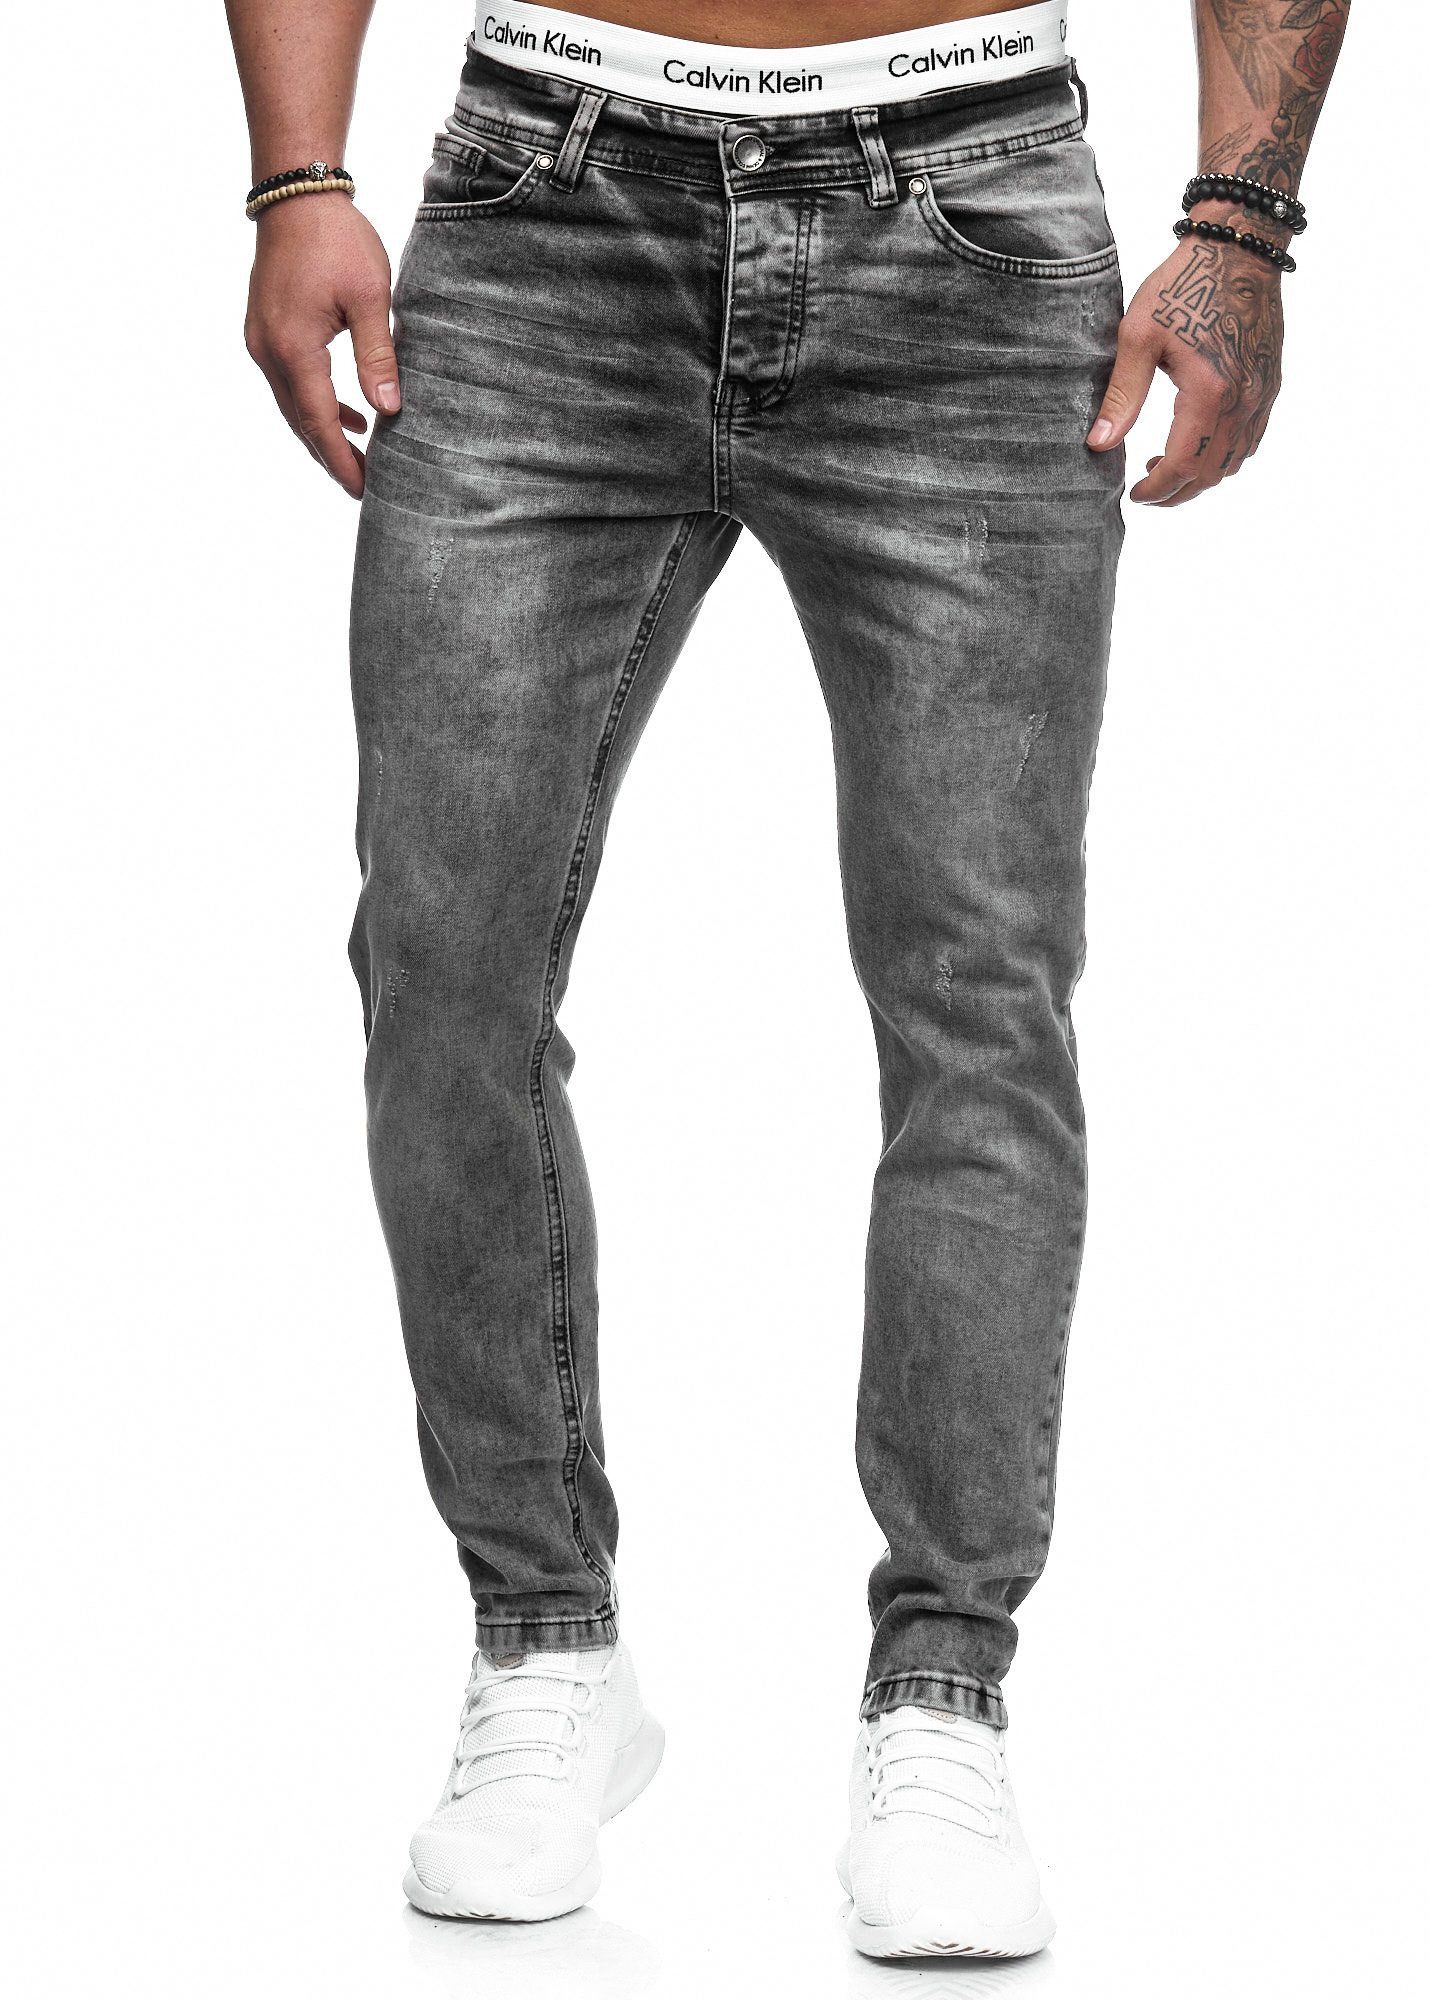 Code47 Chino Herren Stretch Slim-fit-Jeans Grau Jeans Designer Slim Fit 5079 Jeanshose Basic Hose